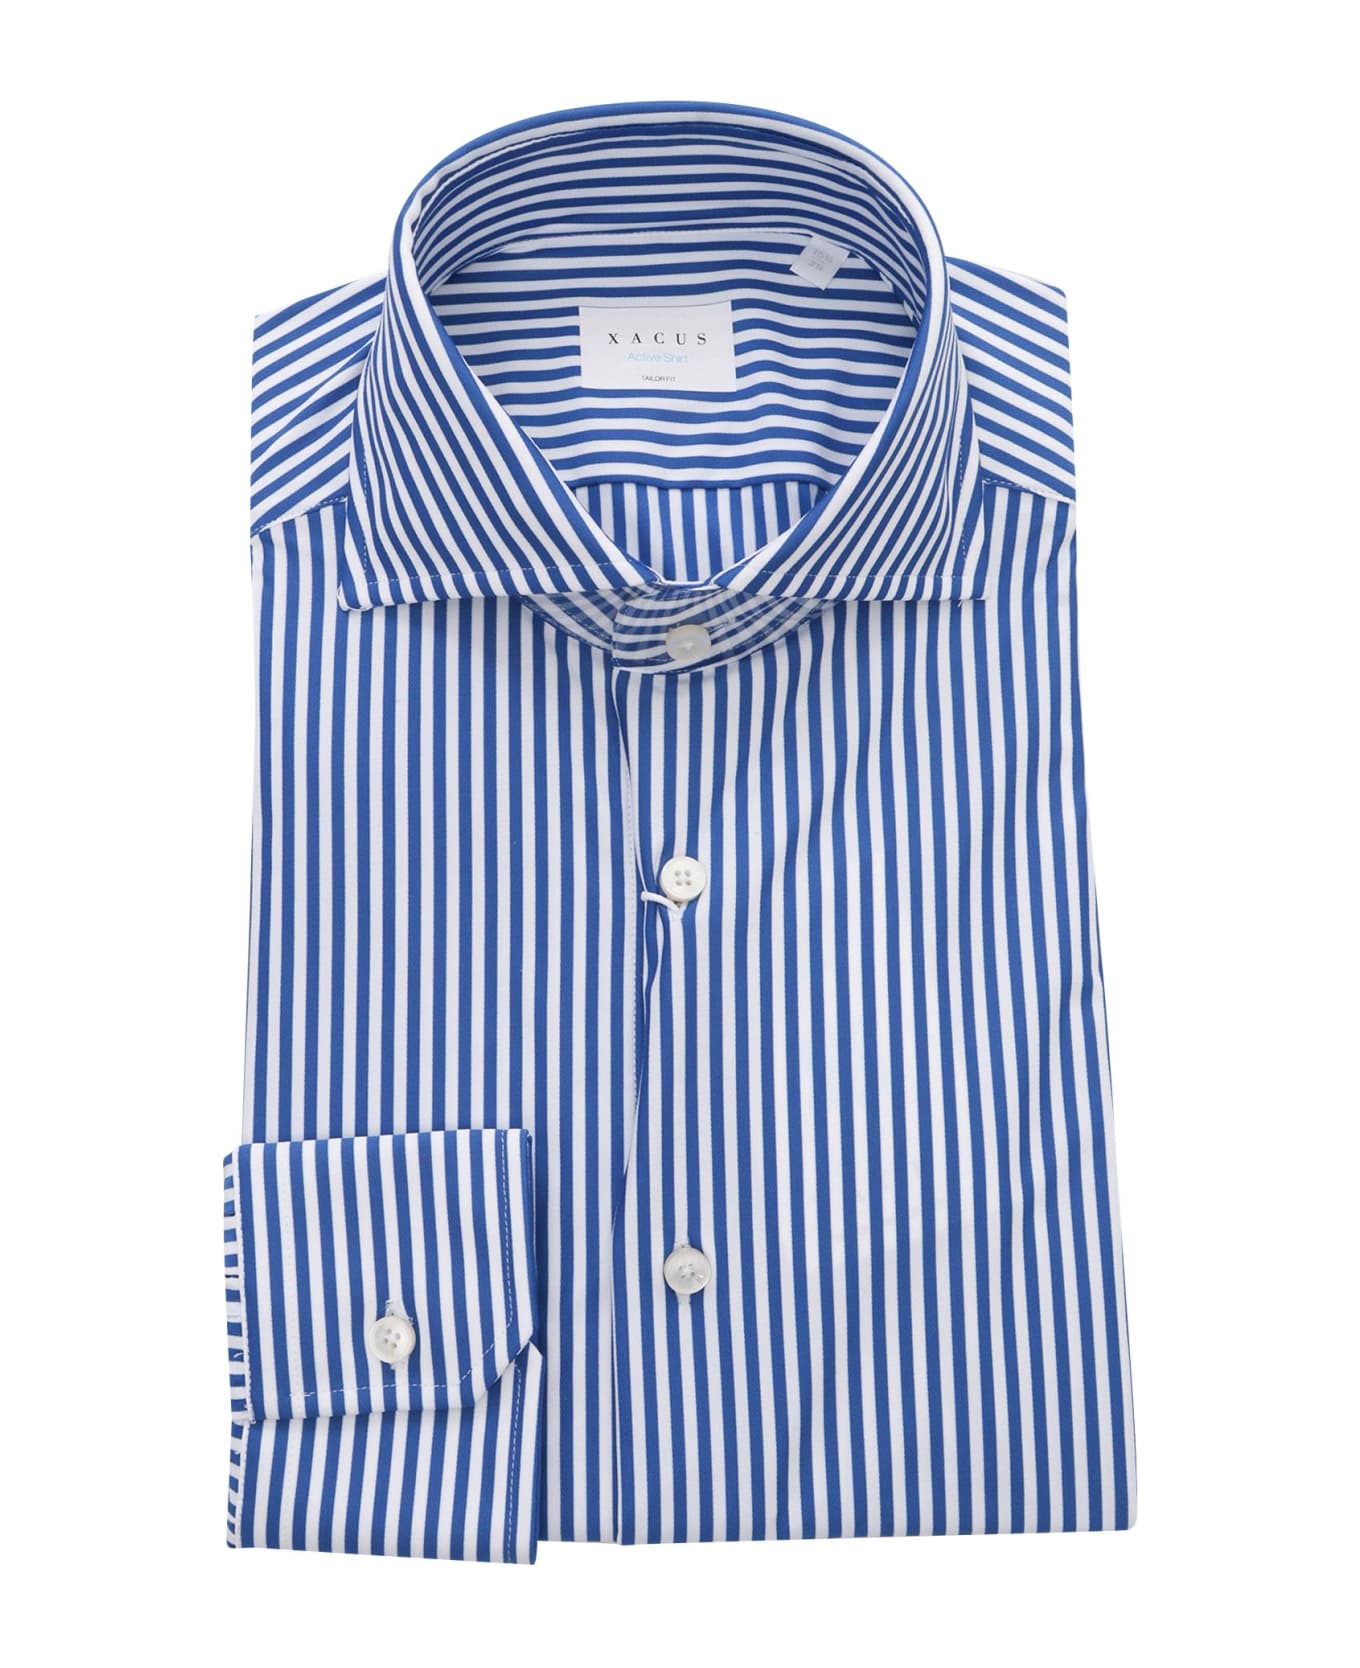 Xacus Blue Striped Shirt - MULTICOLOR シャツ